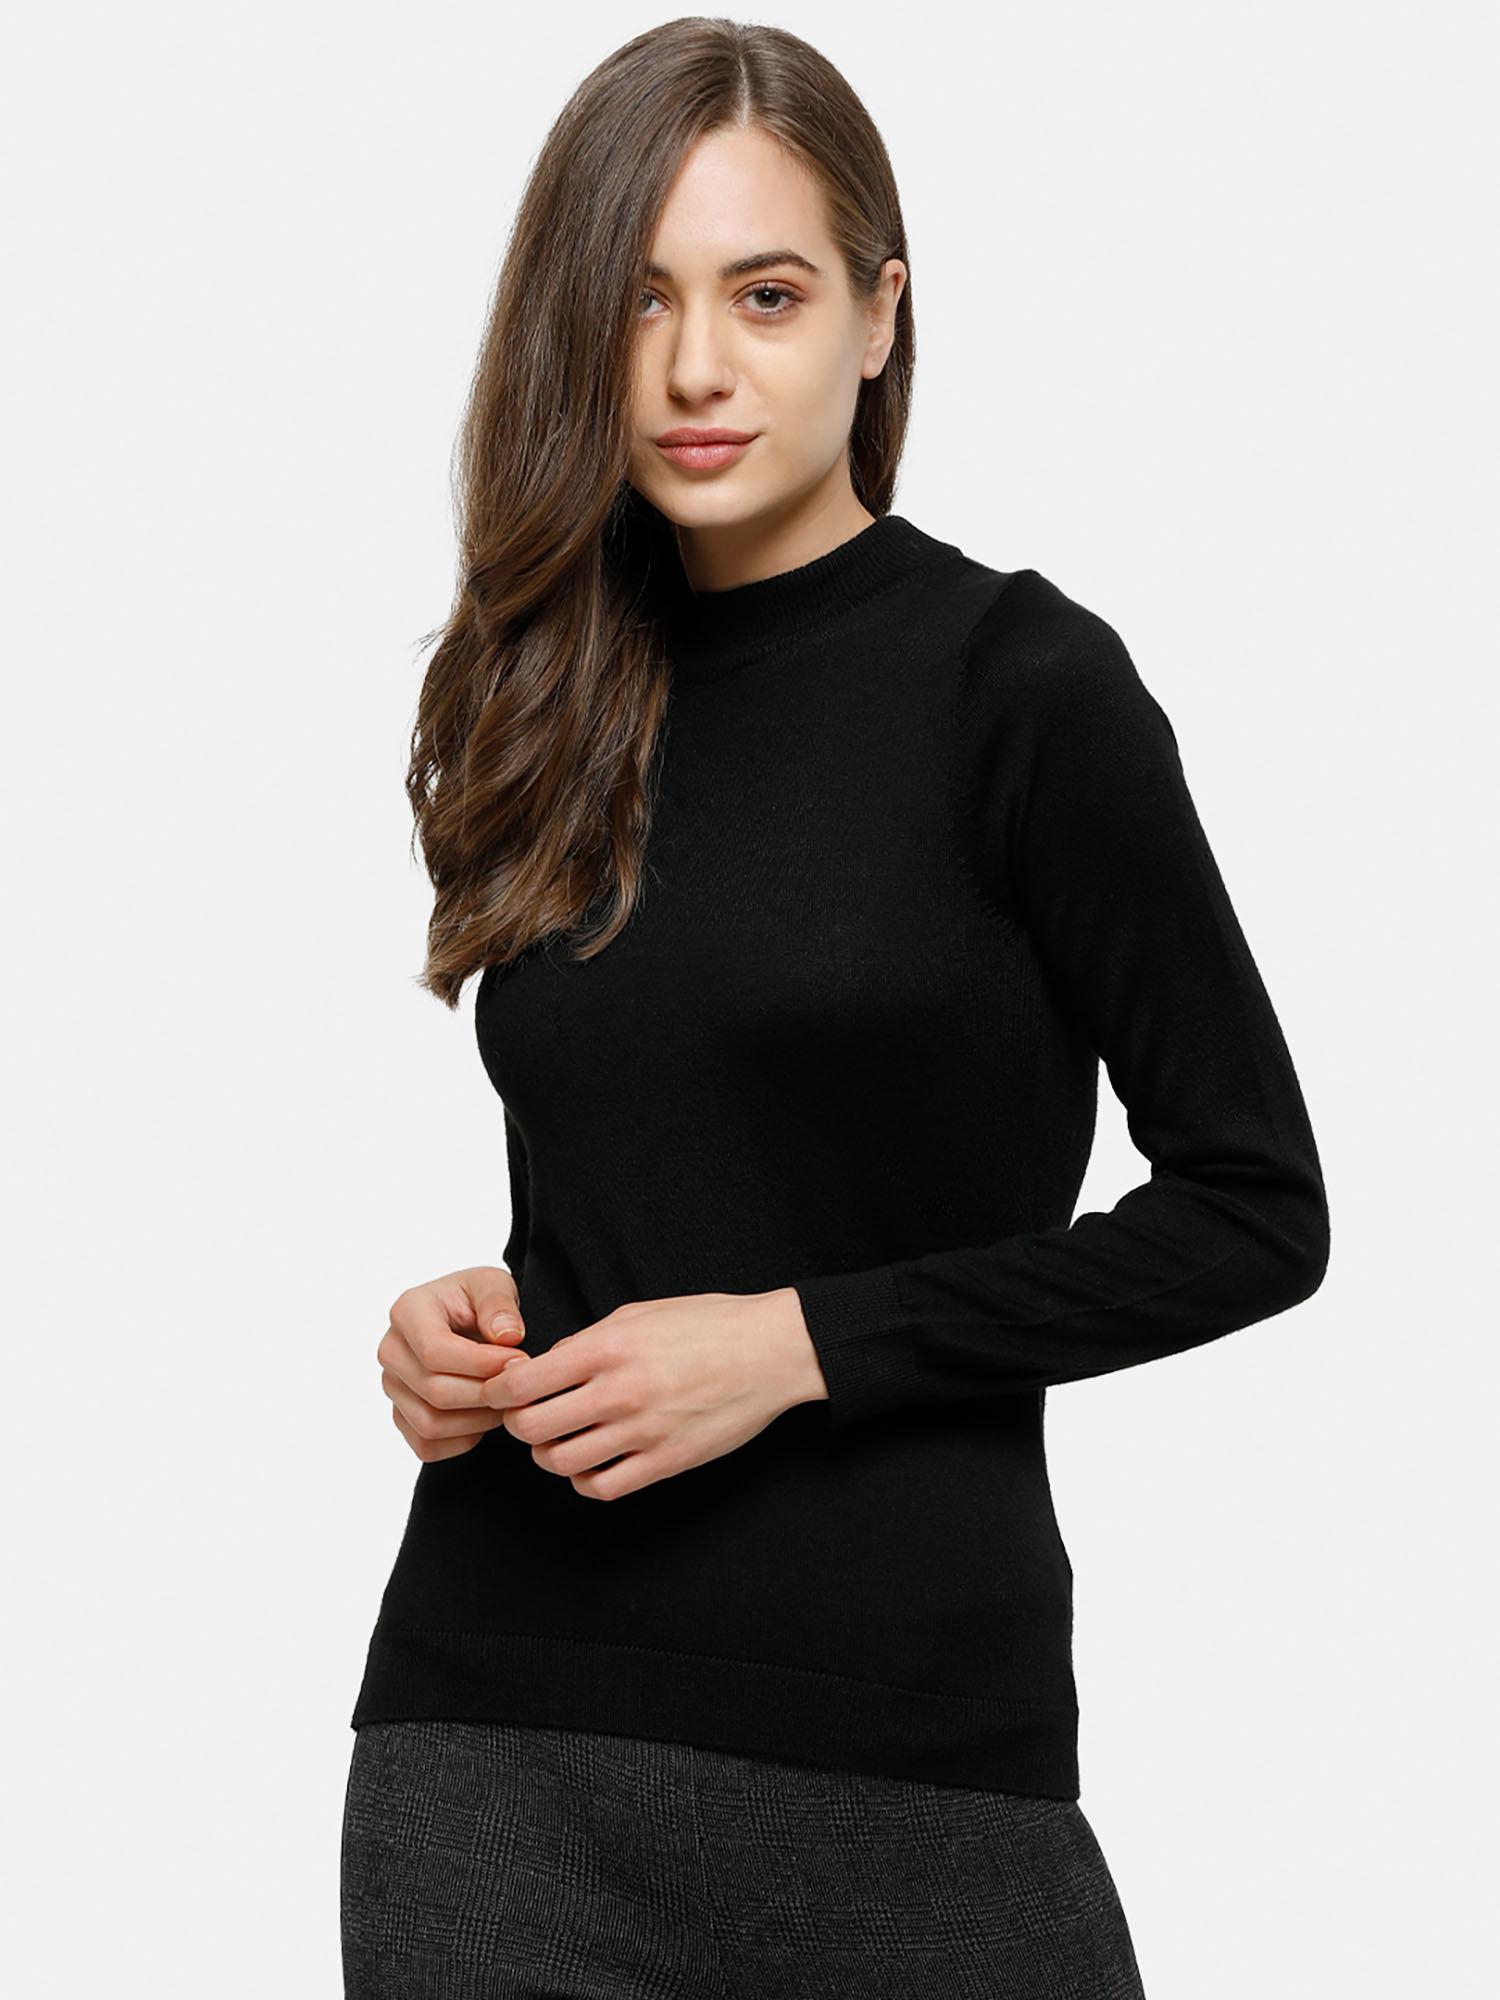 98 degree north's black full sleeves sweater